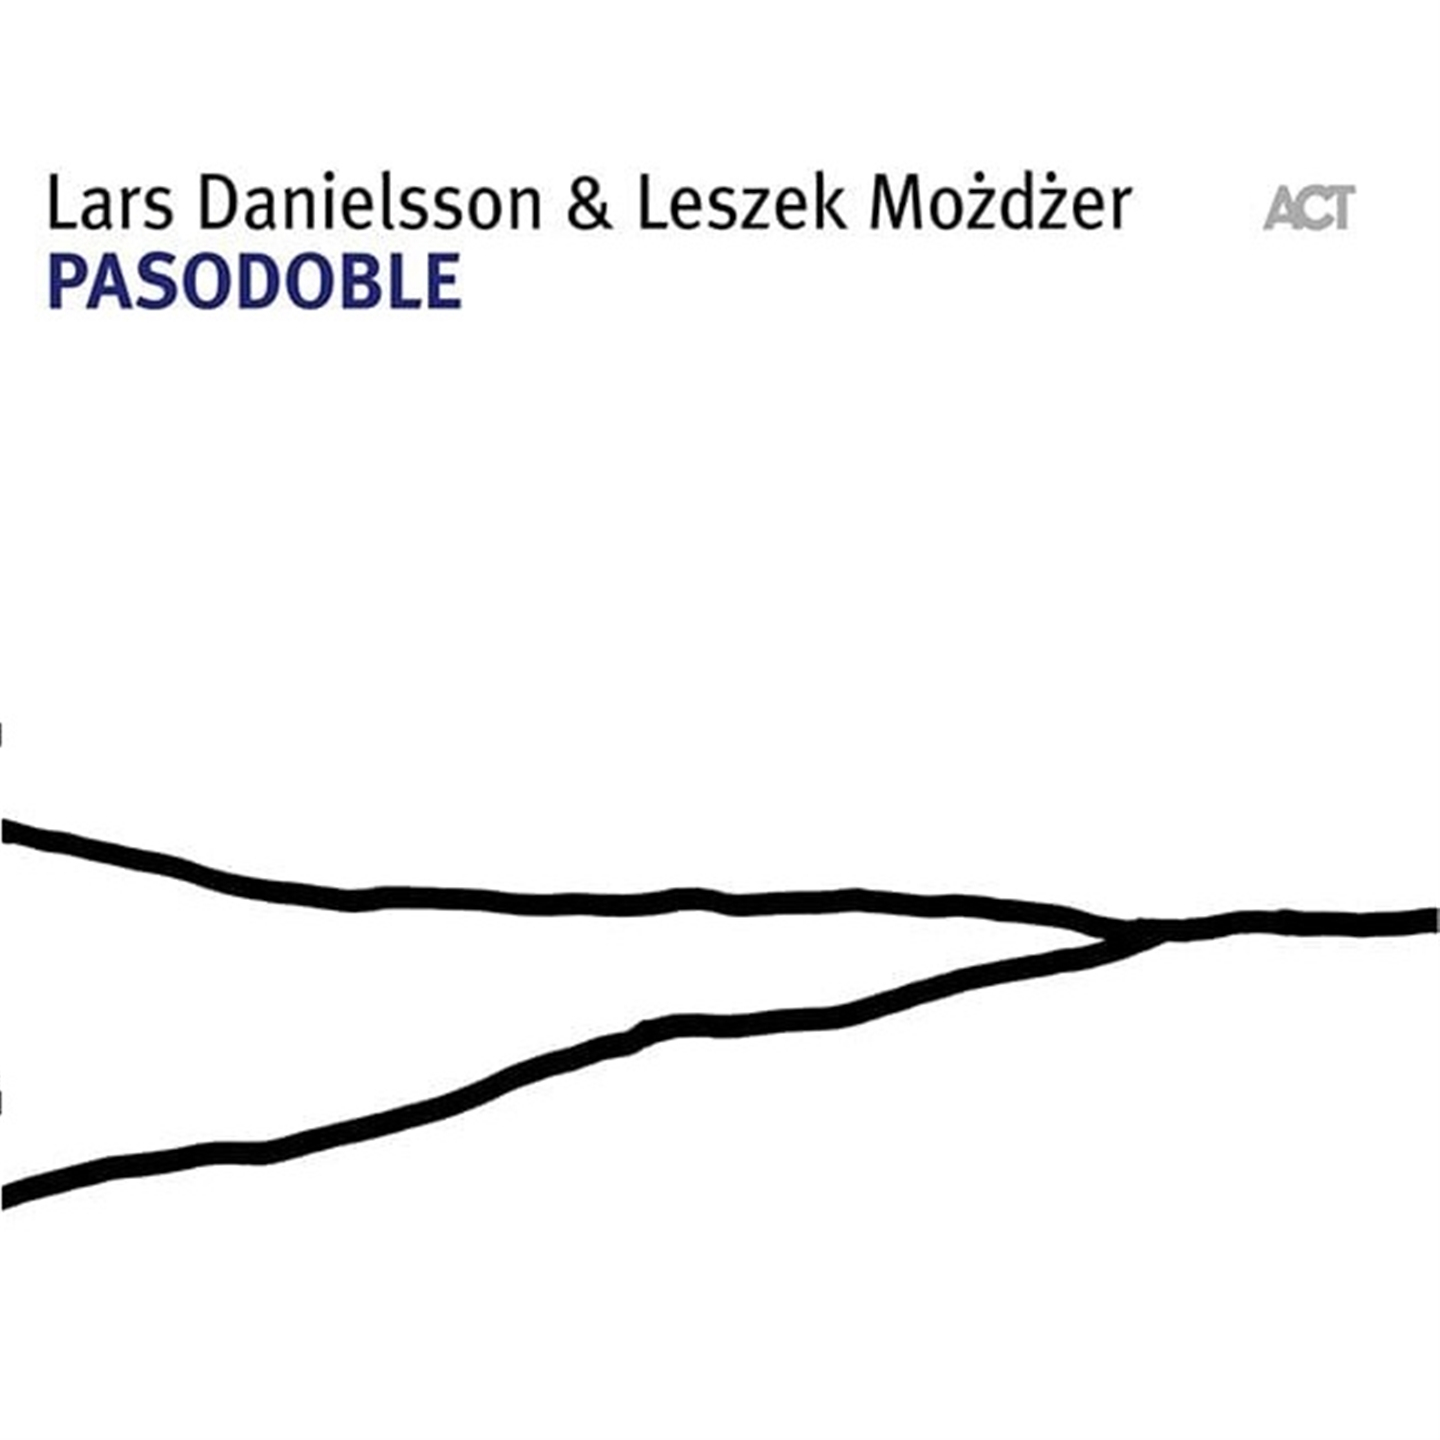 PASODOBLE [2  LP PLUS 5 BONUS TRACKS - INCL. HI-RES DOWNLOAD]